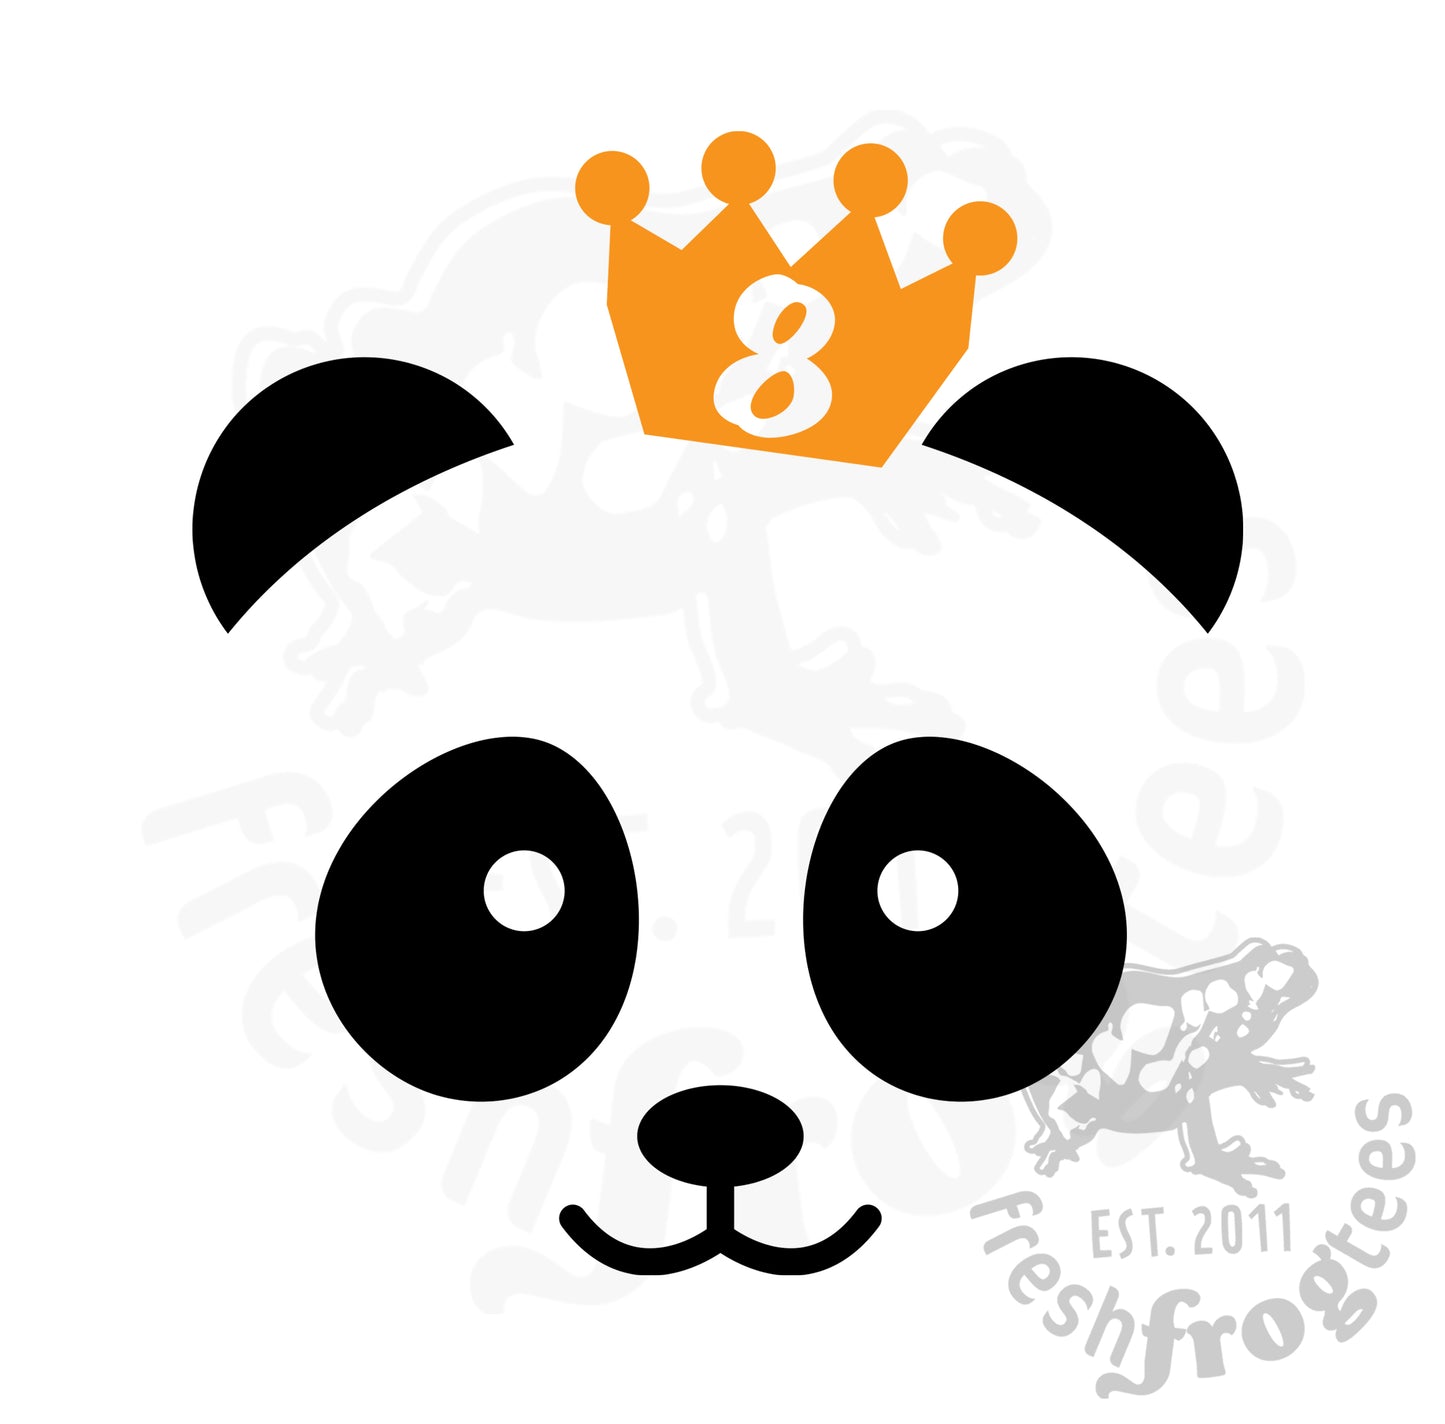 8th birthday panda SVG vector illustration Eighth